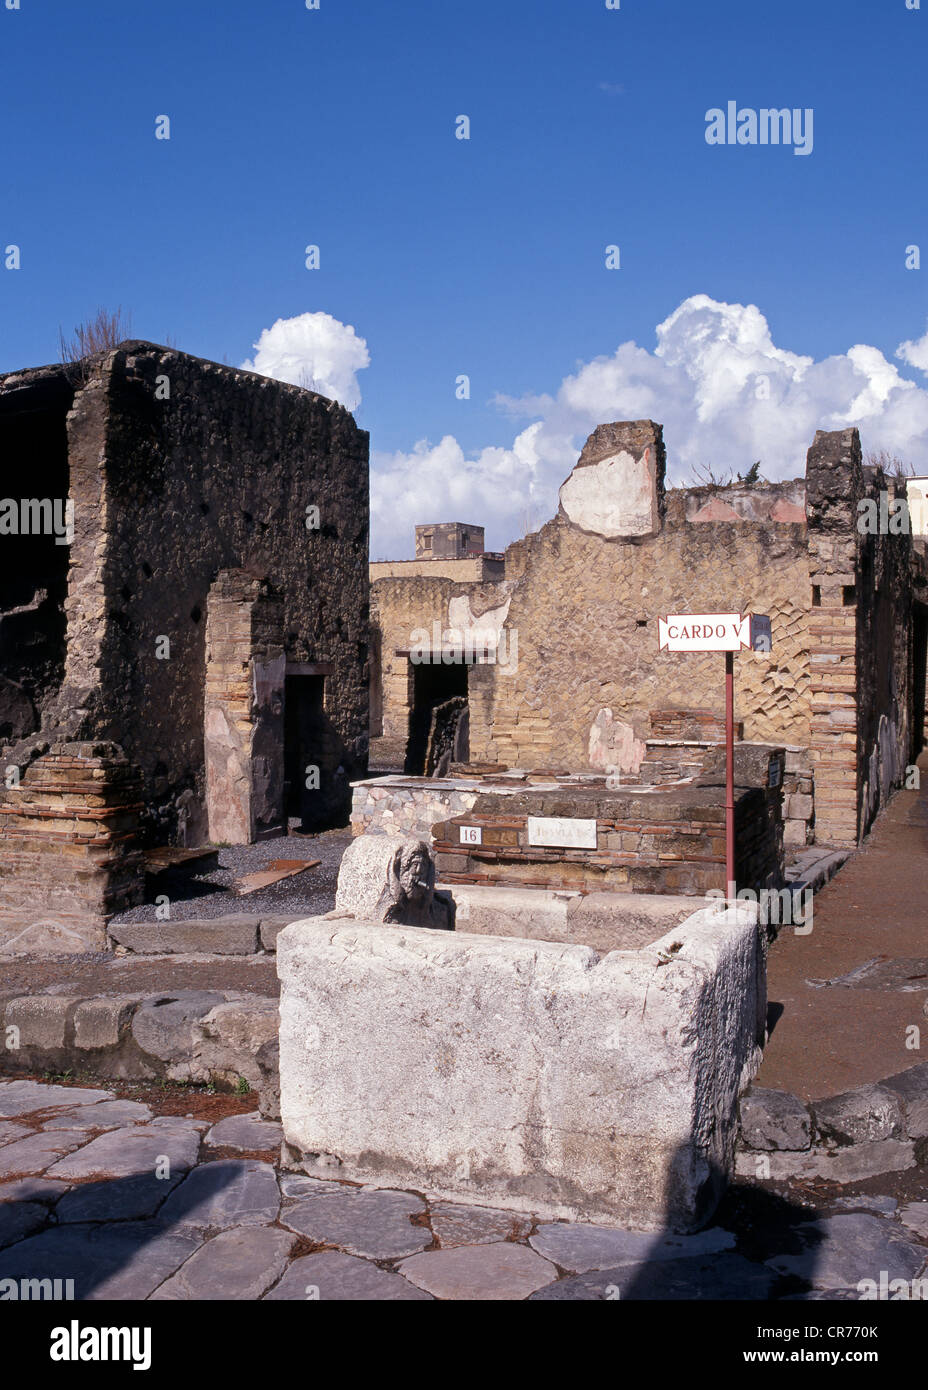 Ruins of a Roman bar on a street corner, Herculaneum, Campania, Italy, Europe. Stock Photo